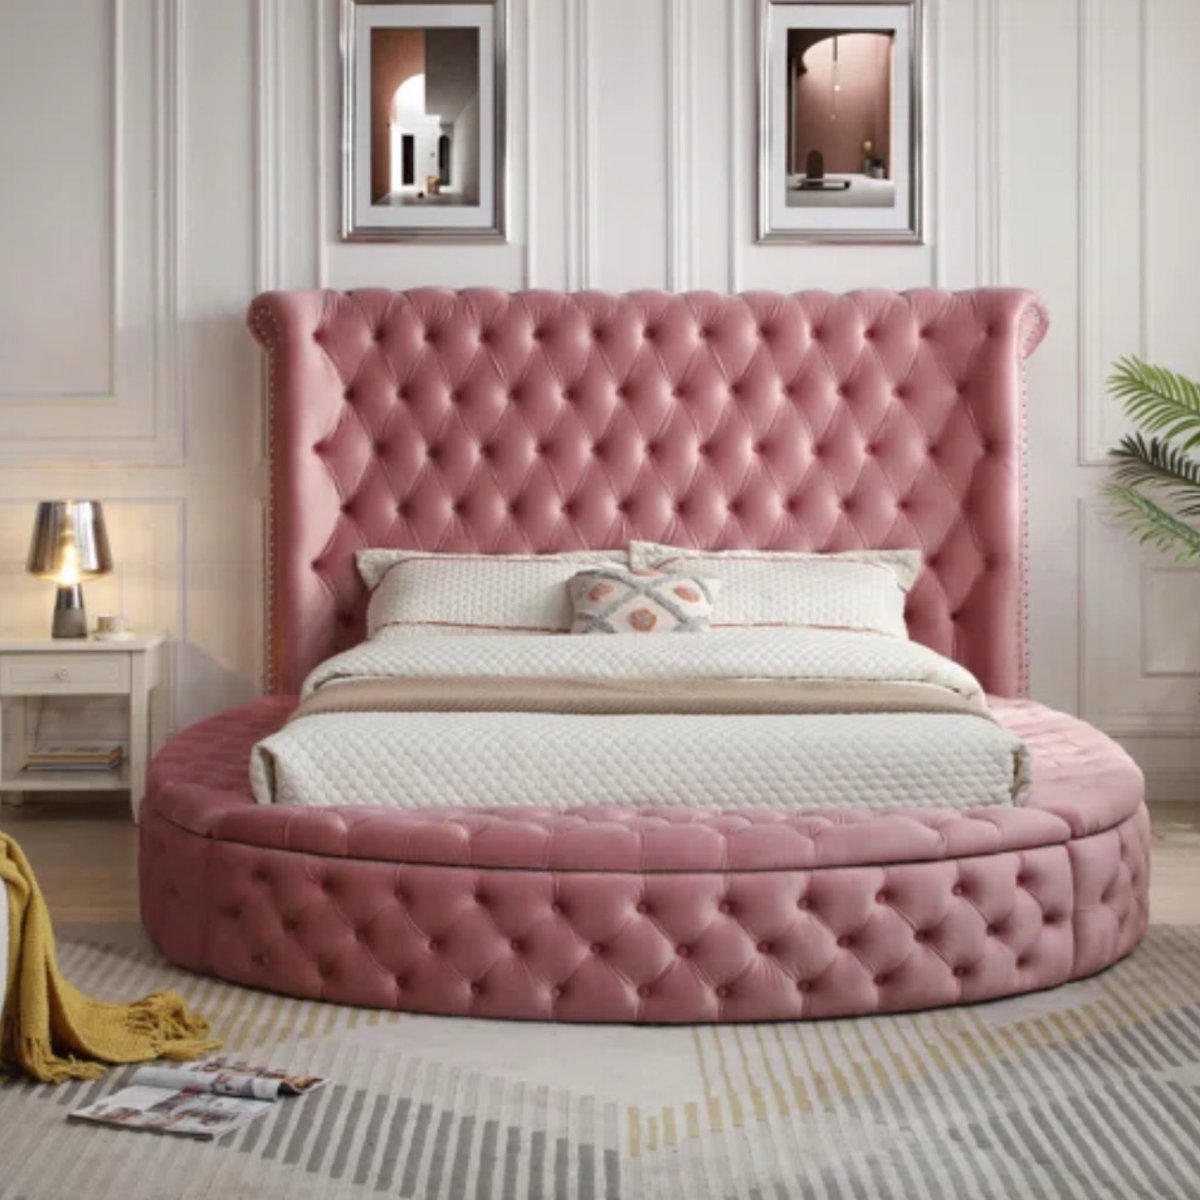 Just copped my #pinkfriday2 bed 🦄 VMAS tonight #nickiminaj 
-
-
-
-
#nickiminajfavoritecomedian #princessbed #interiordesign #interiordesigner #interiordecor #diy #homefashion #pinkbed #queen #nickiminajqueenofrap #lasttimeisawyou #barbz #vmas #vmas2023